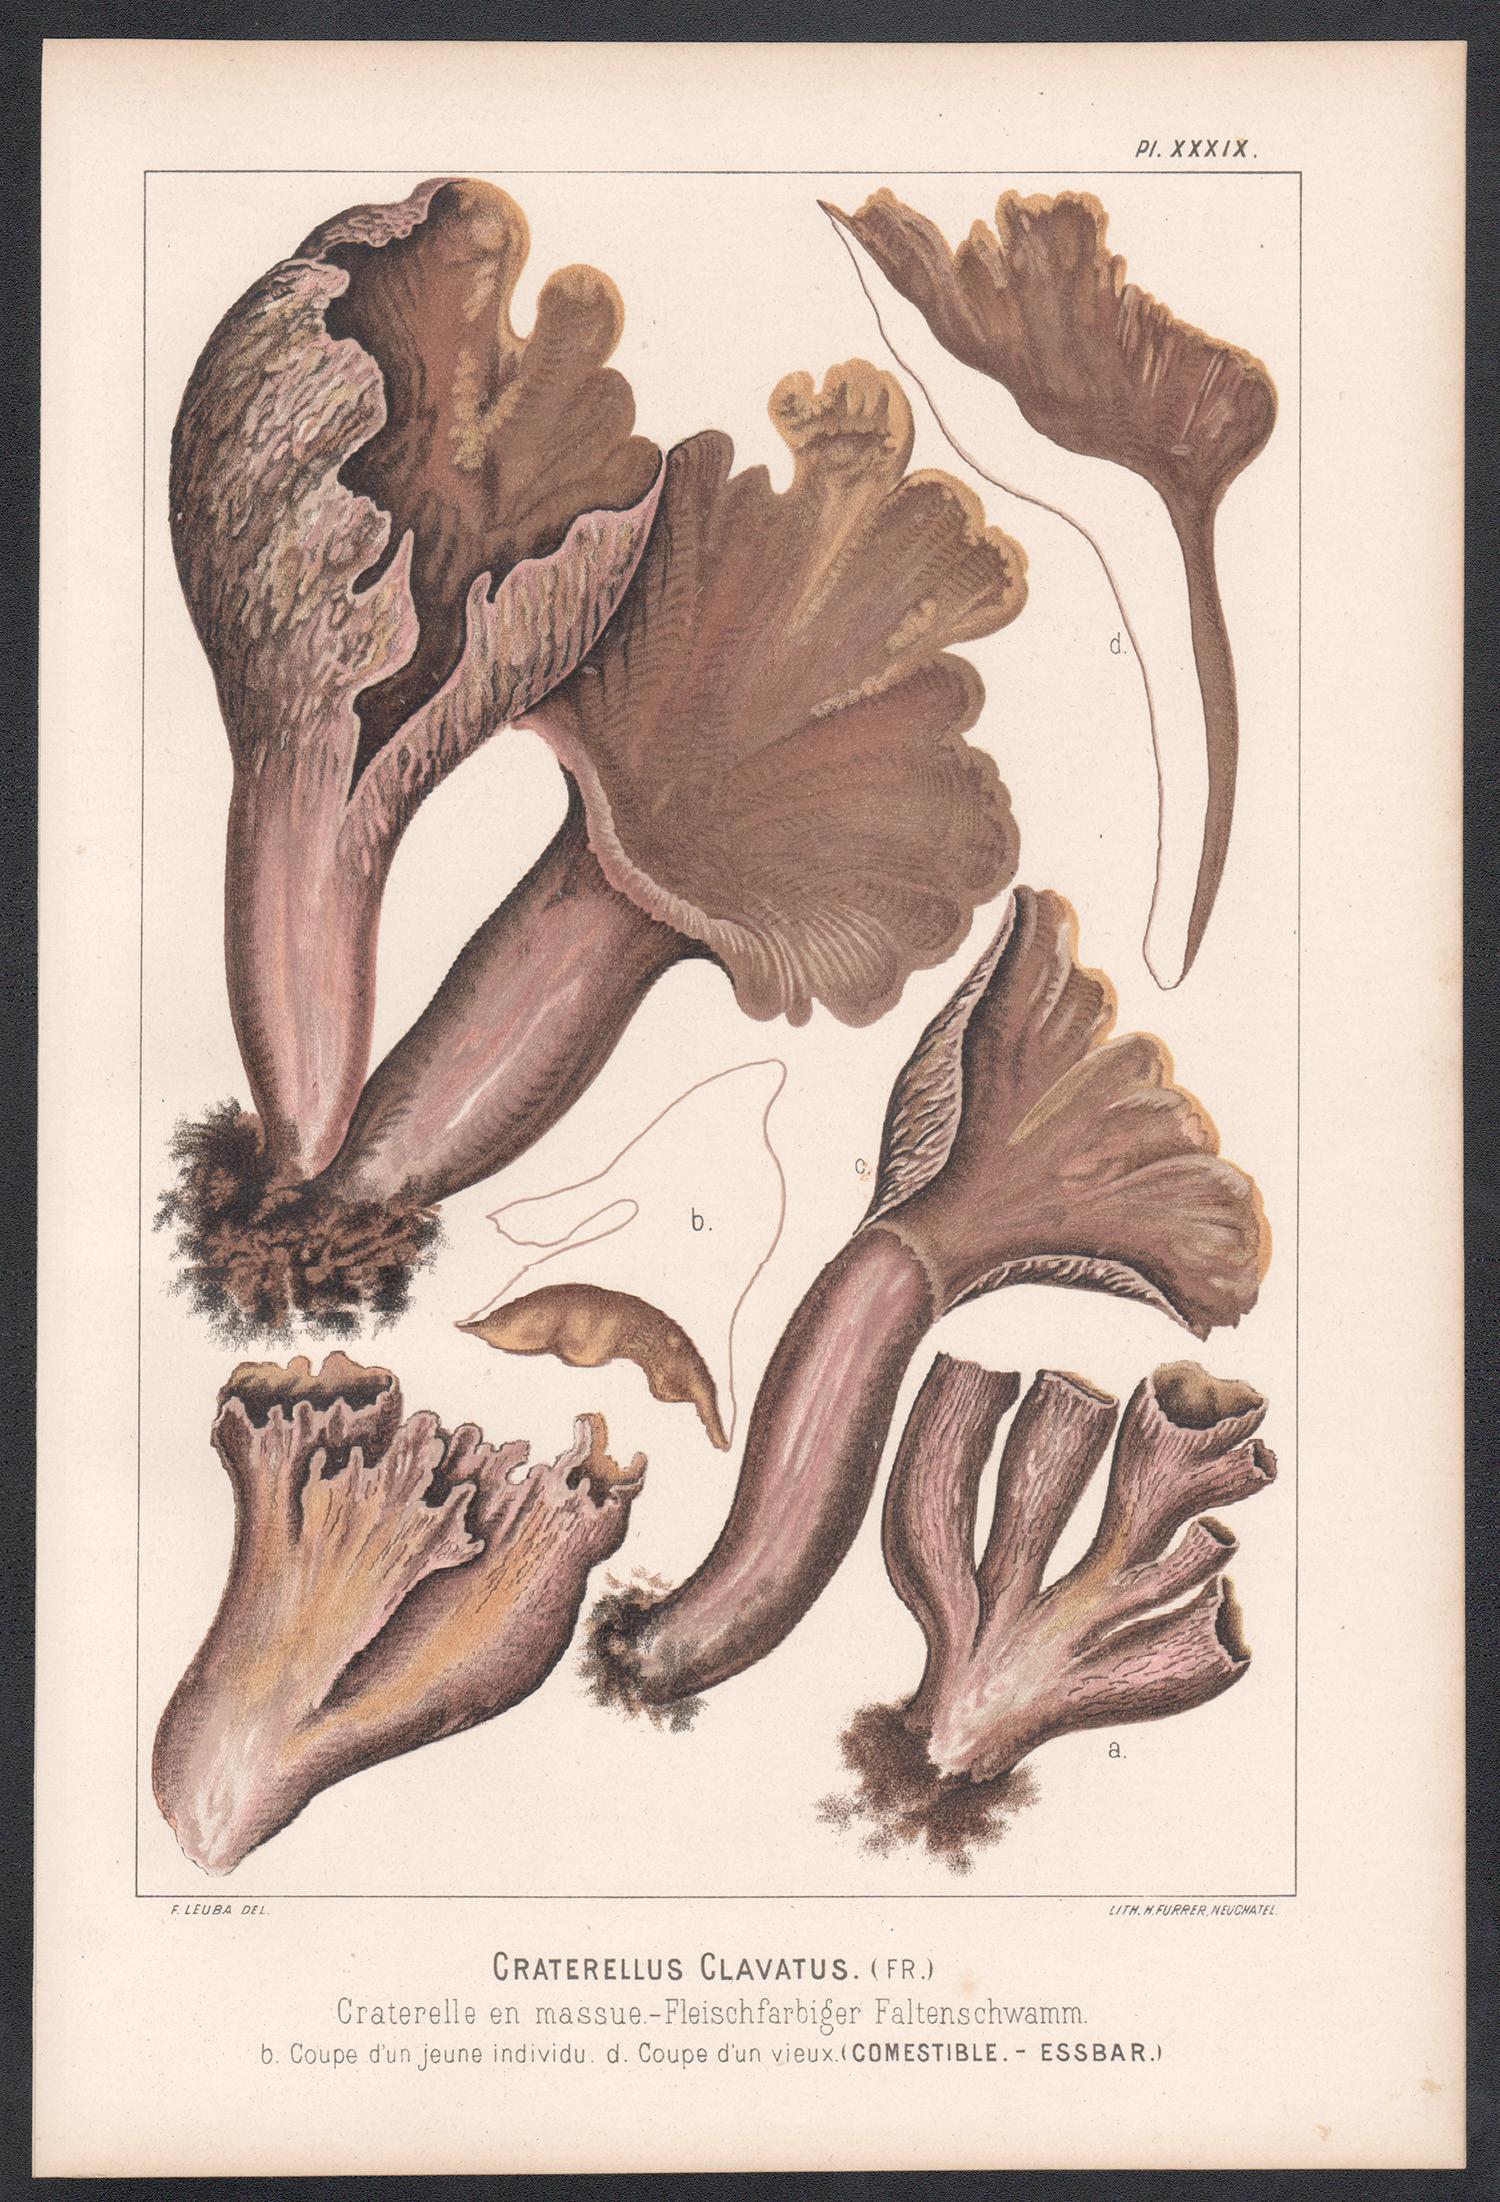 Craterellus Clavatus, Leuba antique mushroom fungi chromolithograph print - Print by H Furrer after Fritz Leuba